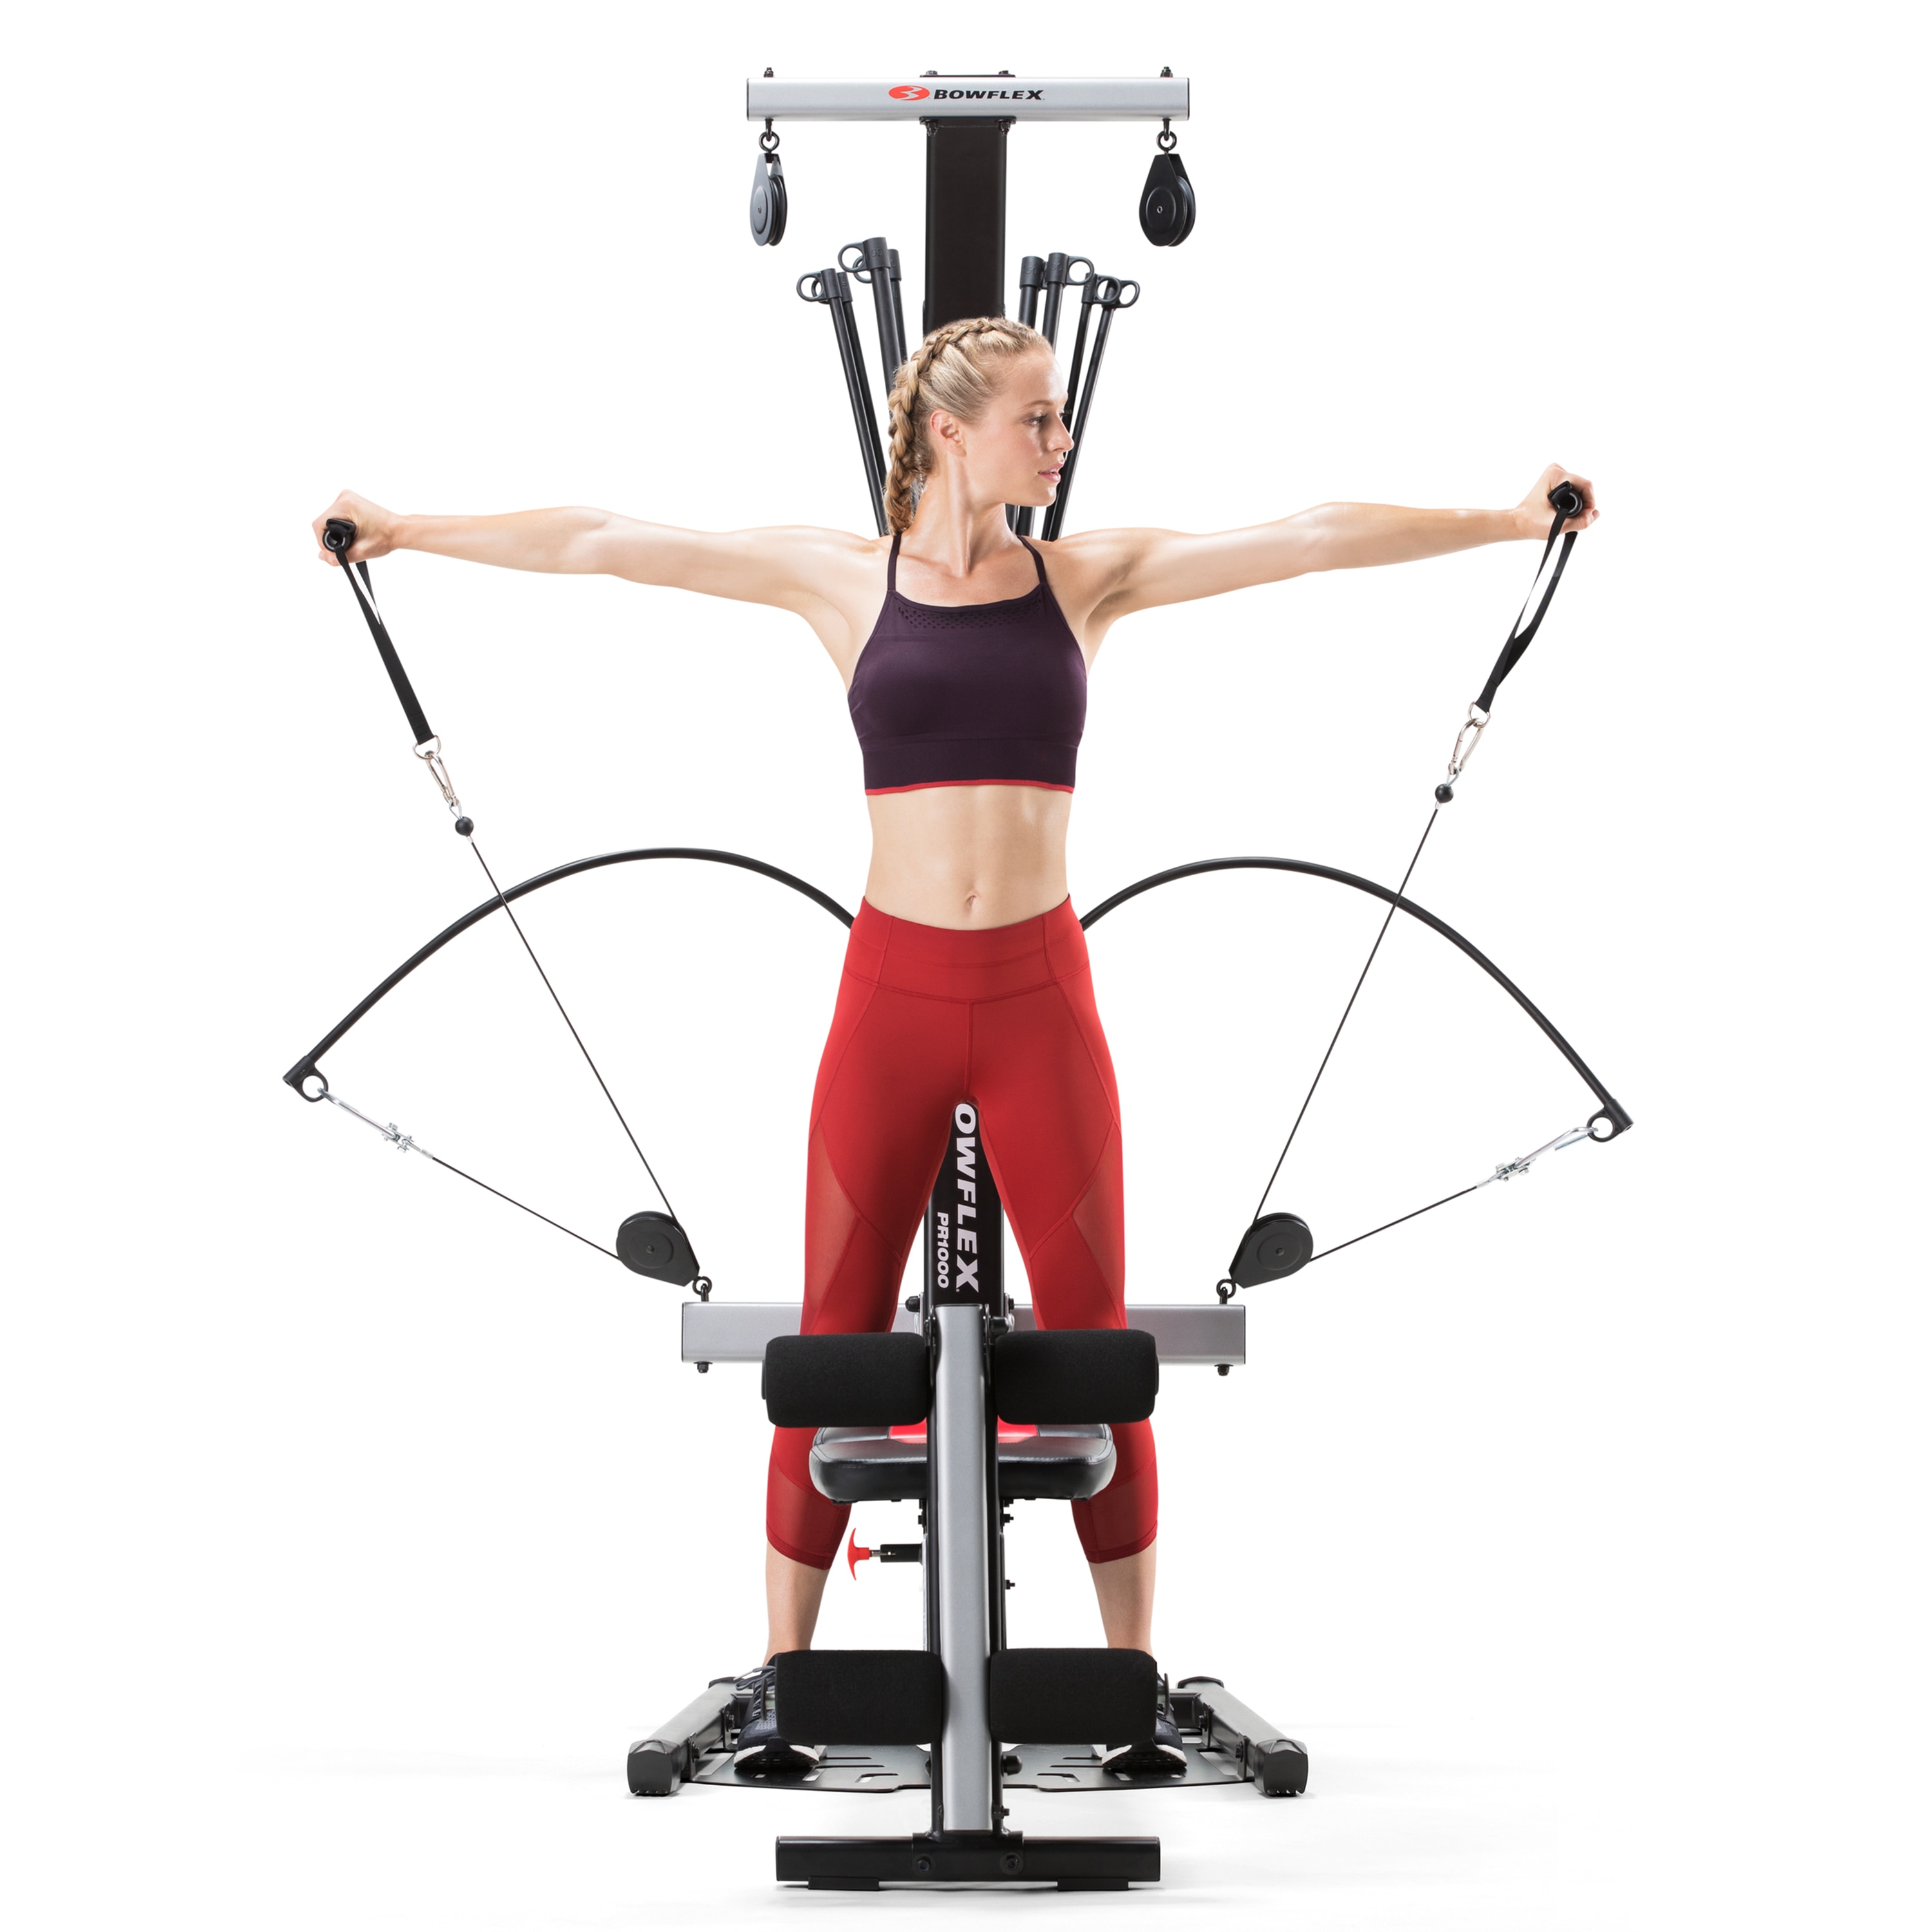 bowflex-pr1000-home-gym-freestanding-strength-training-machines-in-the-strength-training